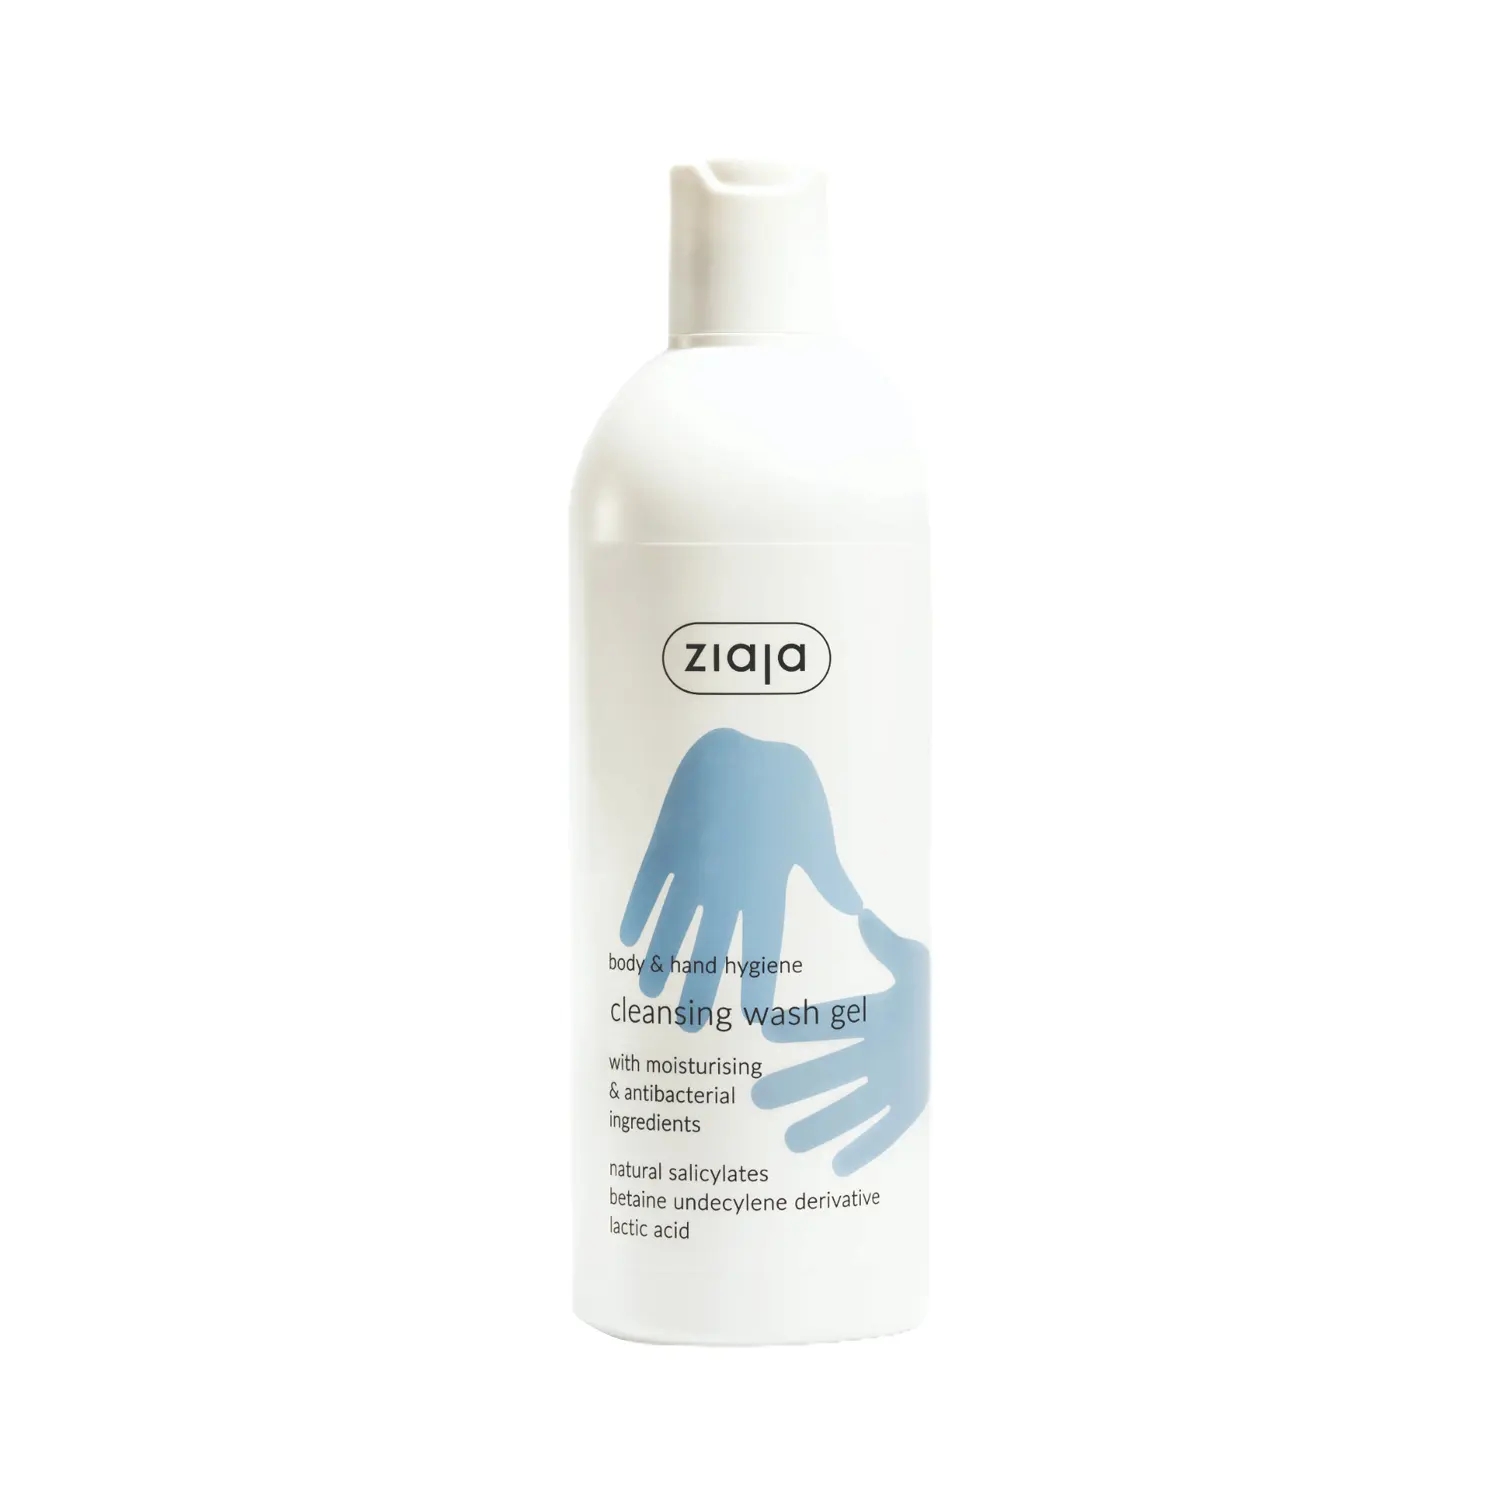 Ziaja | Ziaja Body And Hand Hygiene Cleansing Wash Gel (400ml)